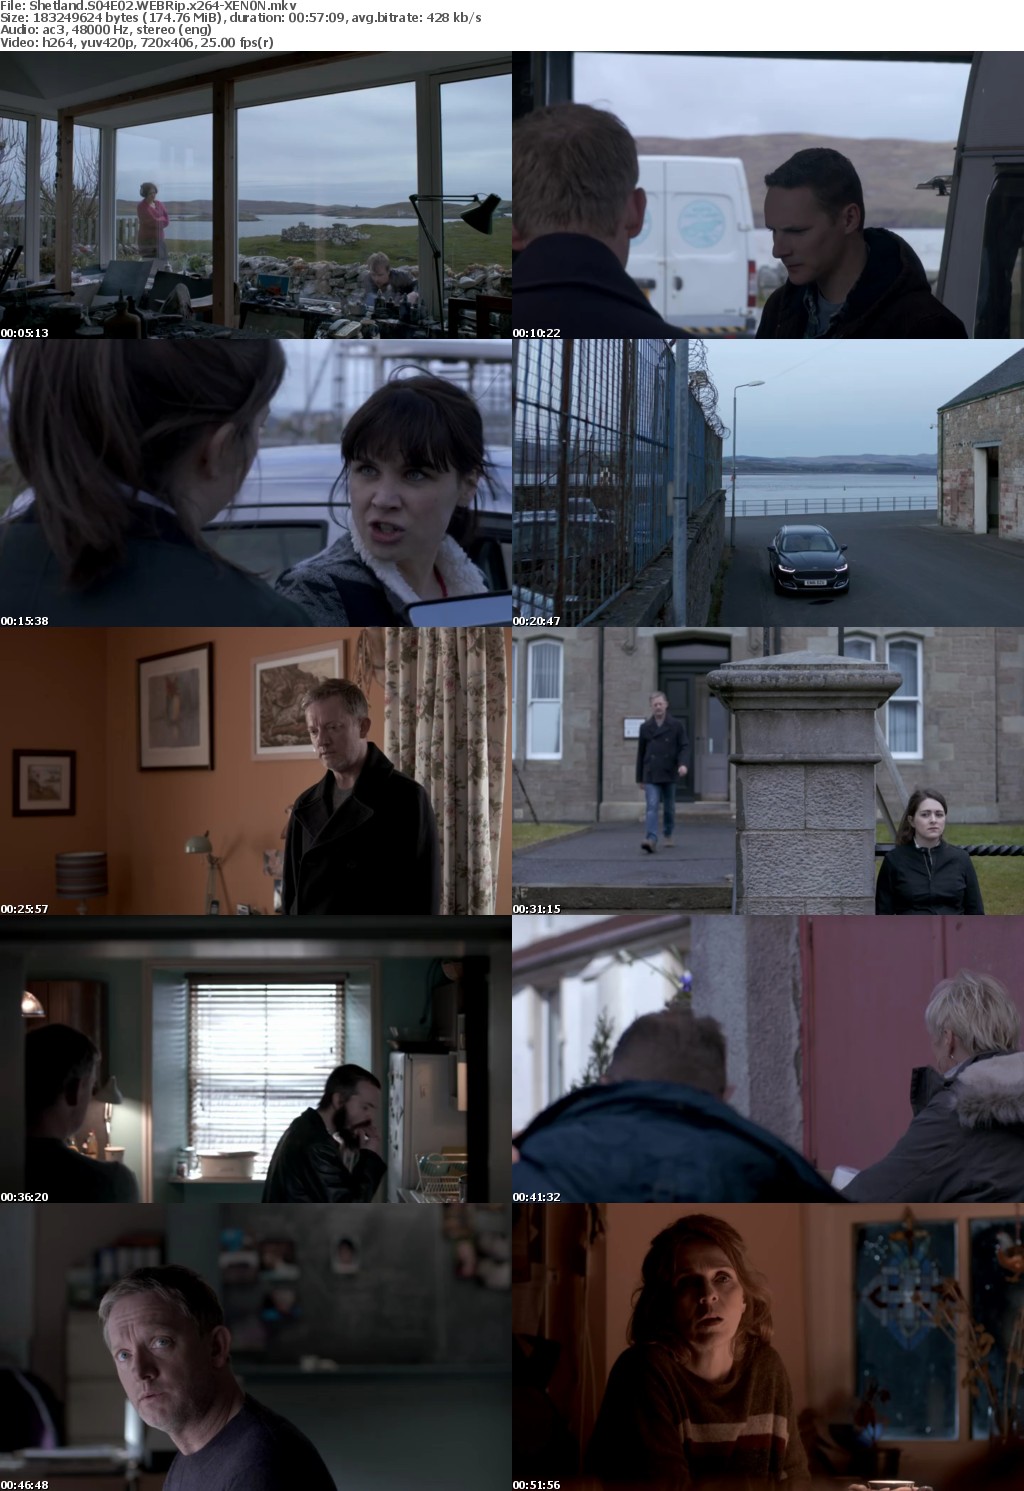 Shetland S04E02 WEBRip x264-XEN0N